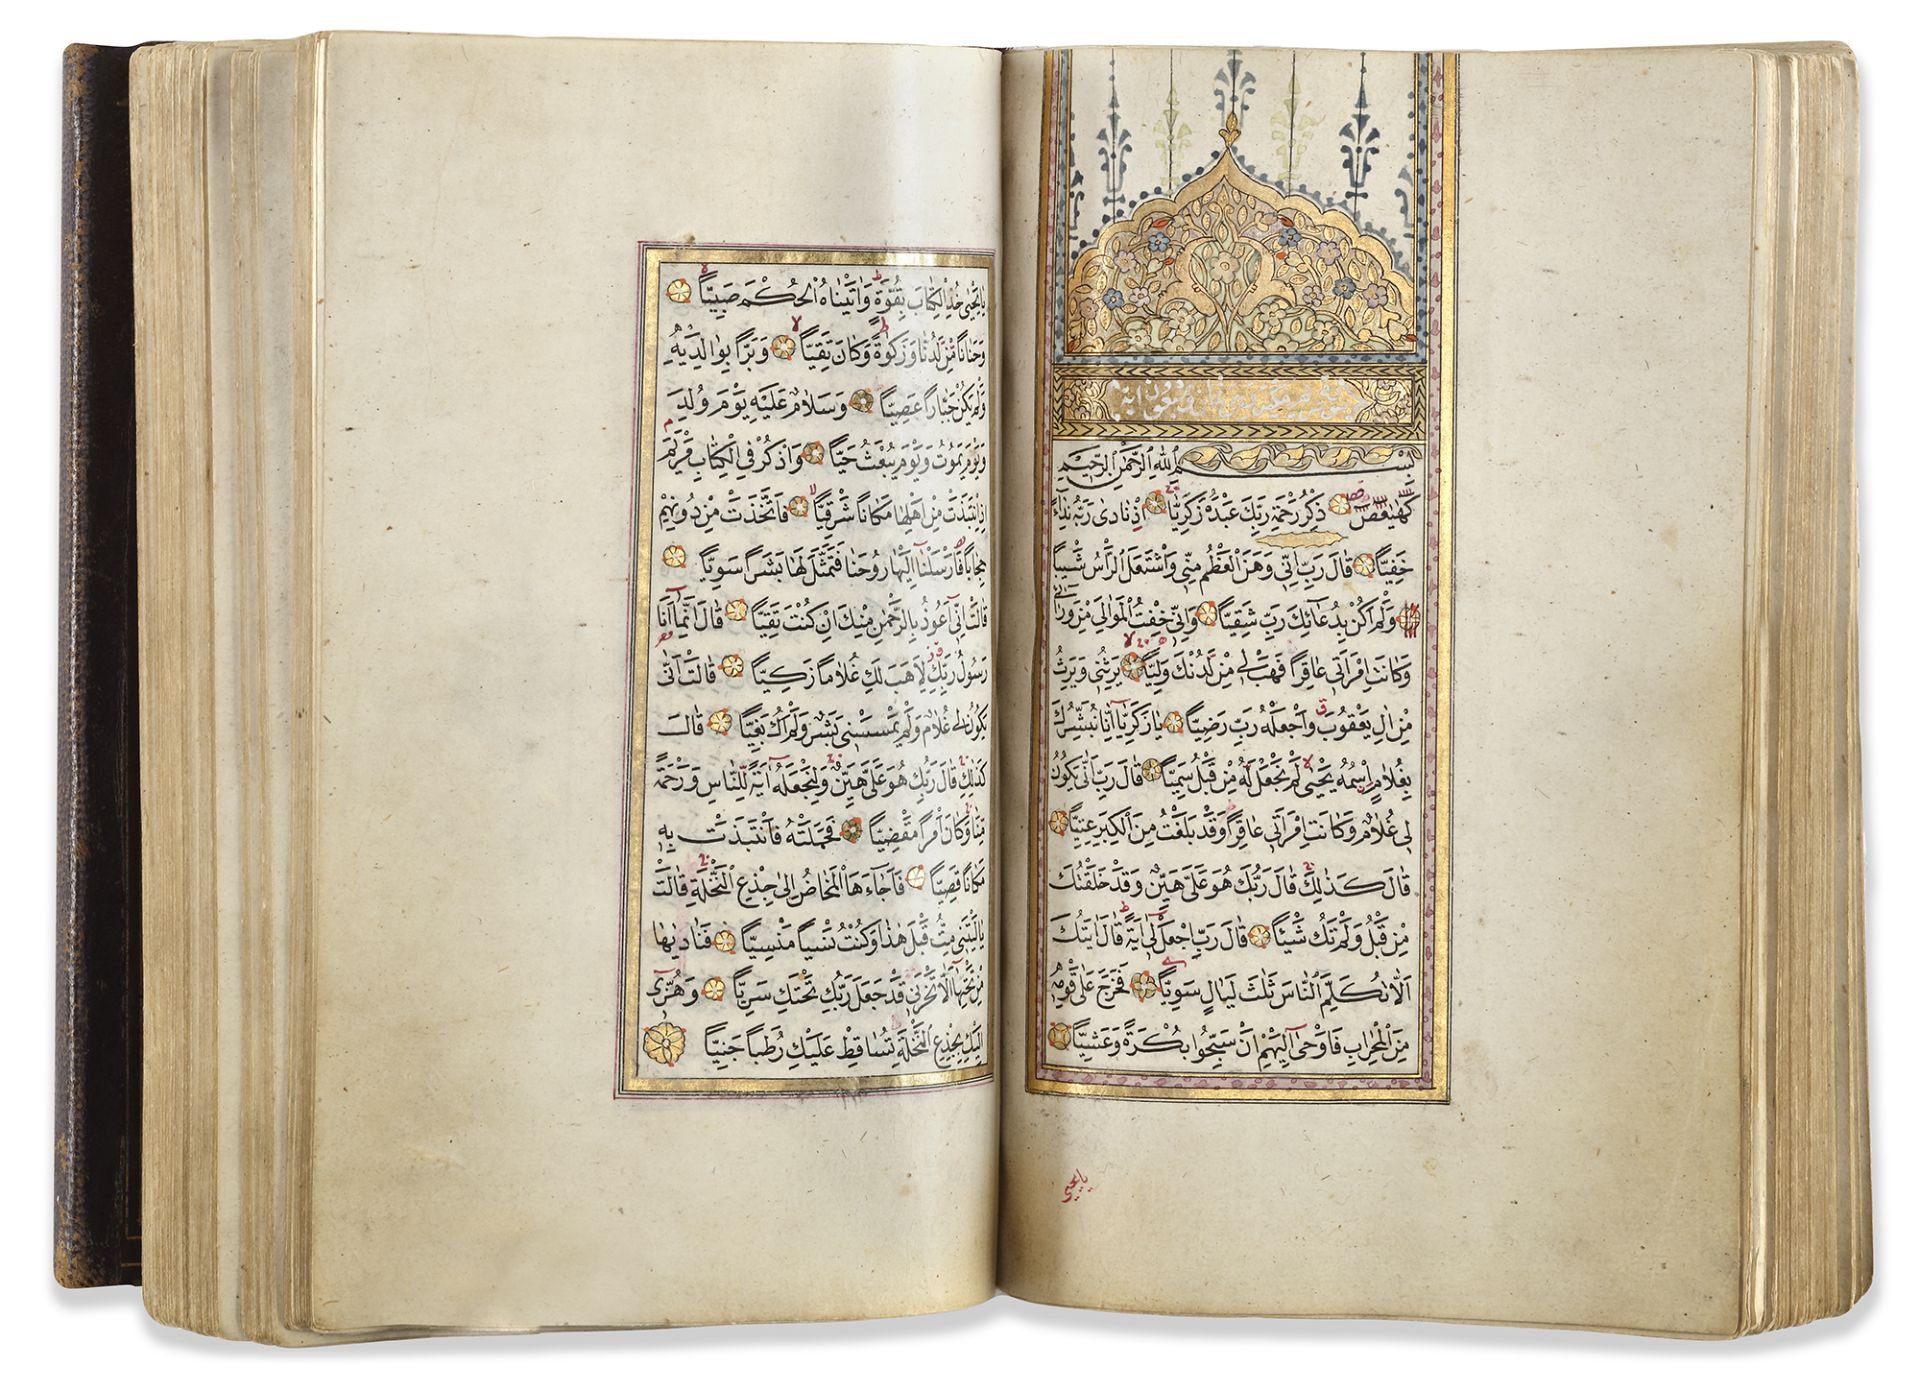 A QURAN SIGNED HAFIZ MEHMED VEHBI, OTTOMAN TURKEY, DATED 1219 AH/1804 AD - Image 4 of 6